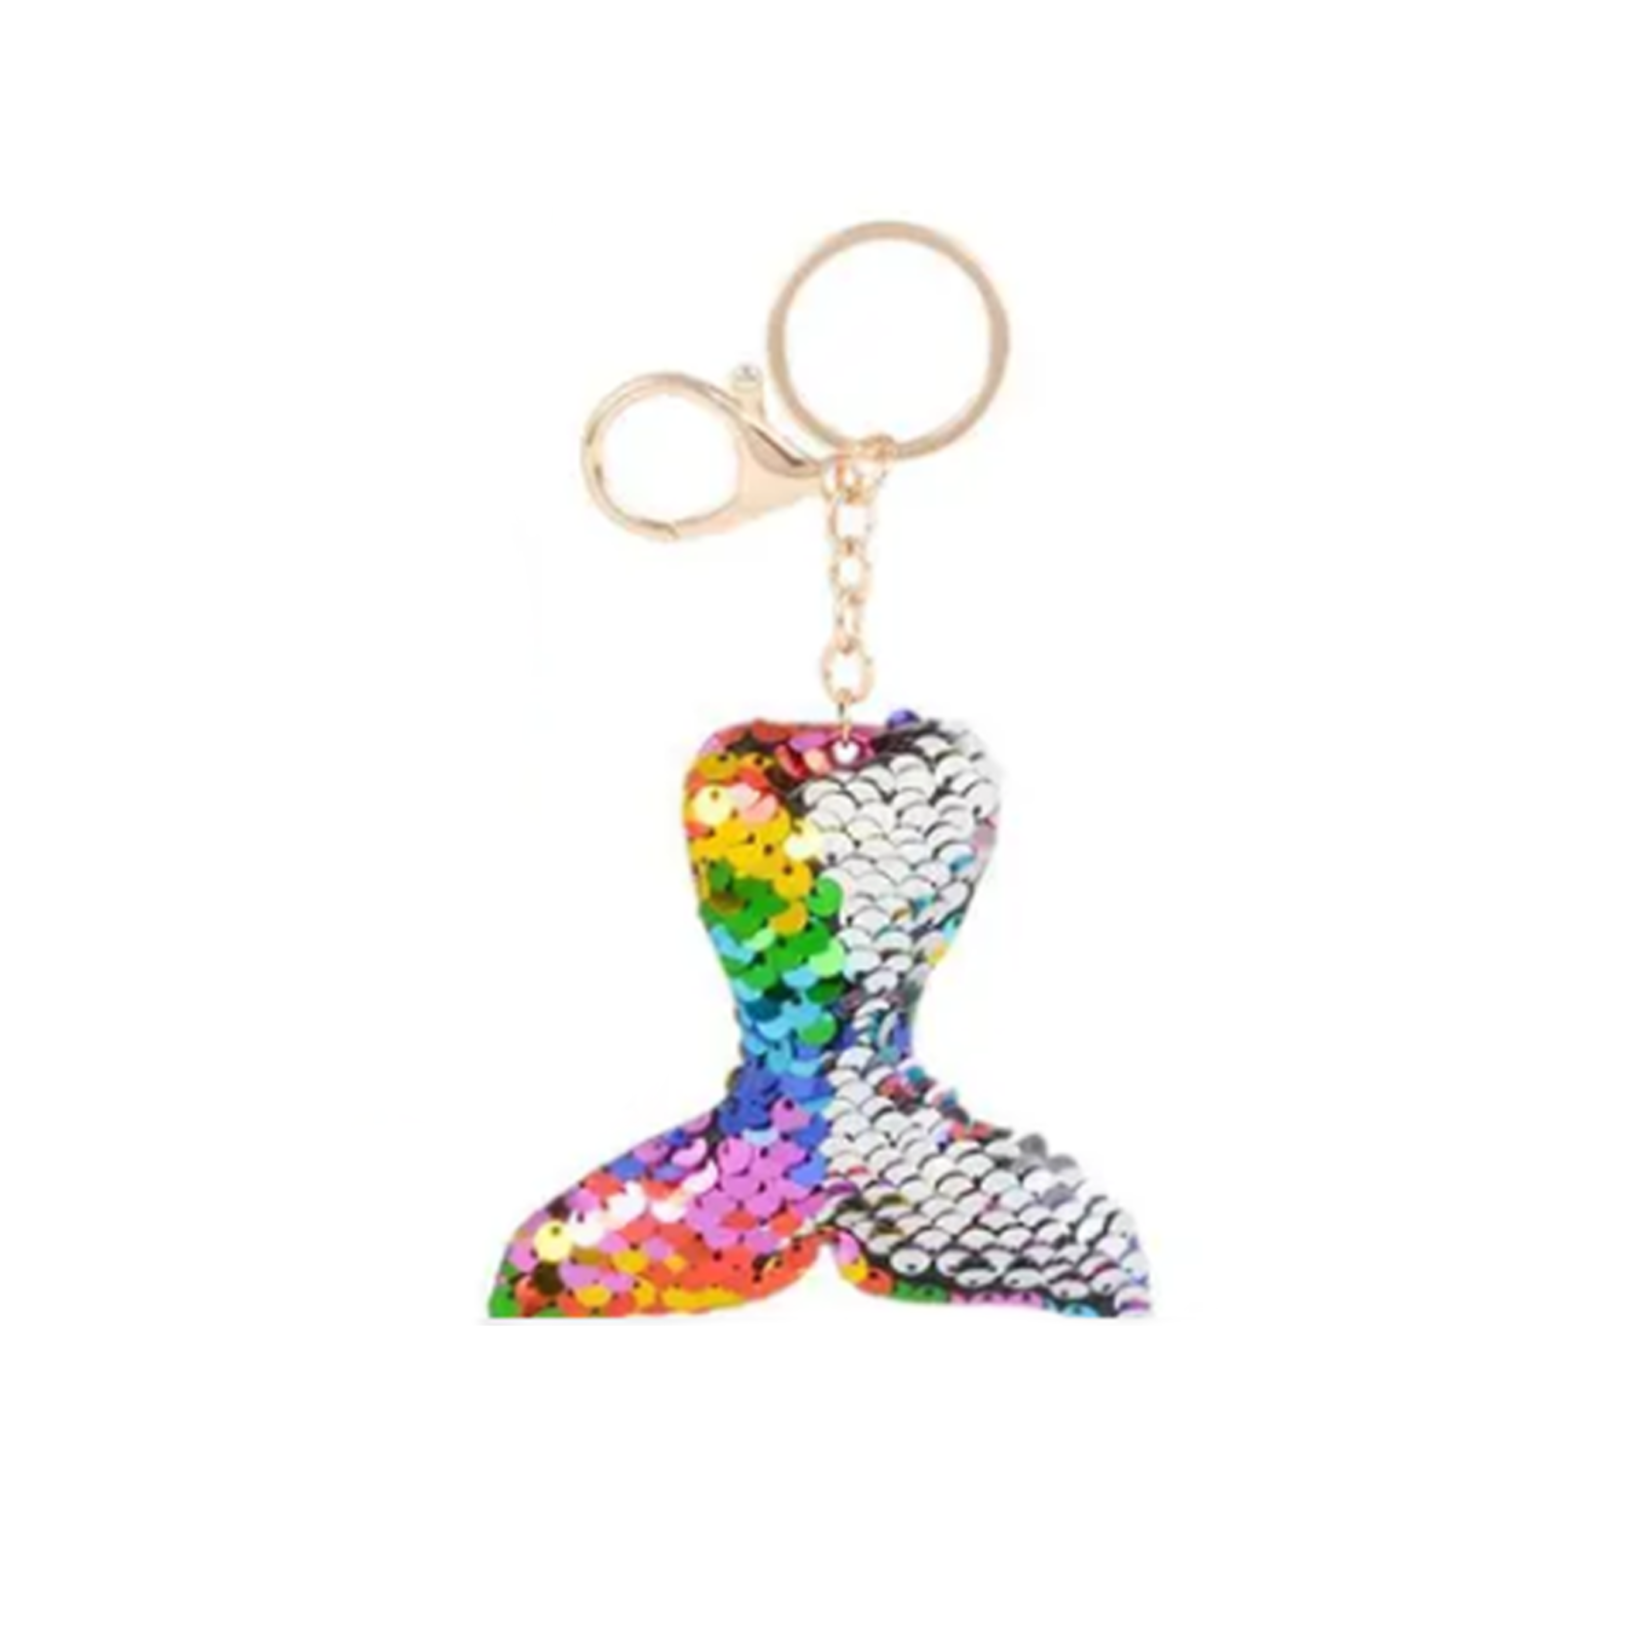 Mermaid Tail Sequin Key Chain (3.5")